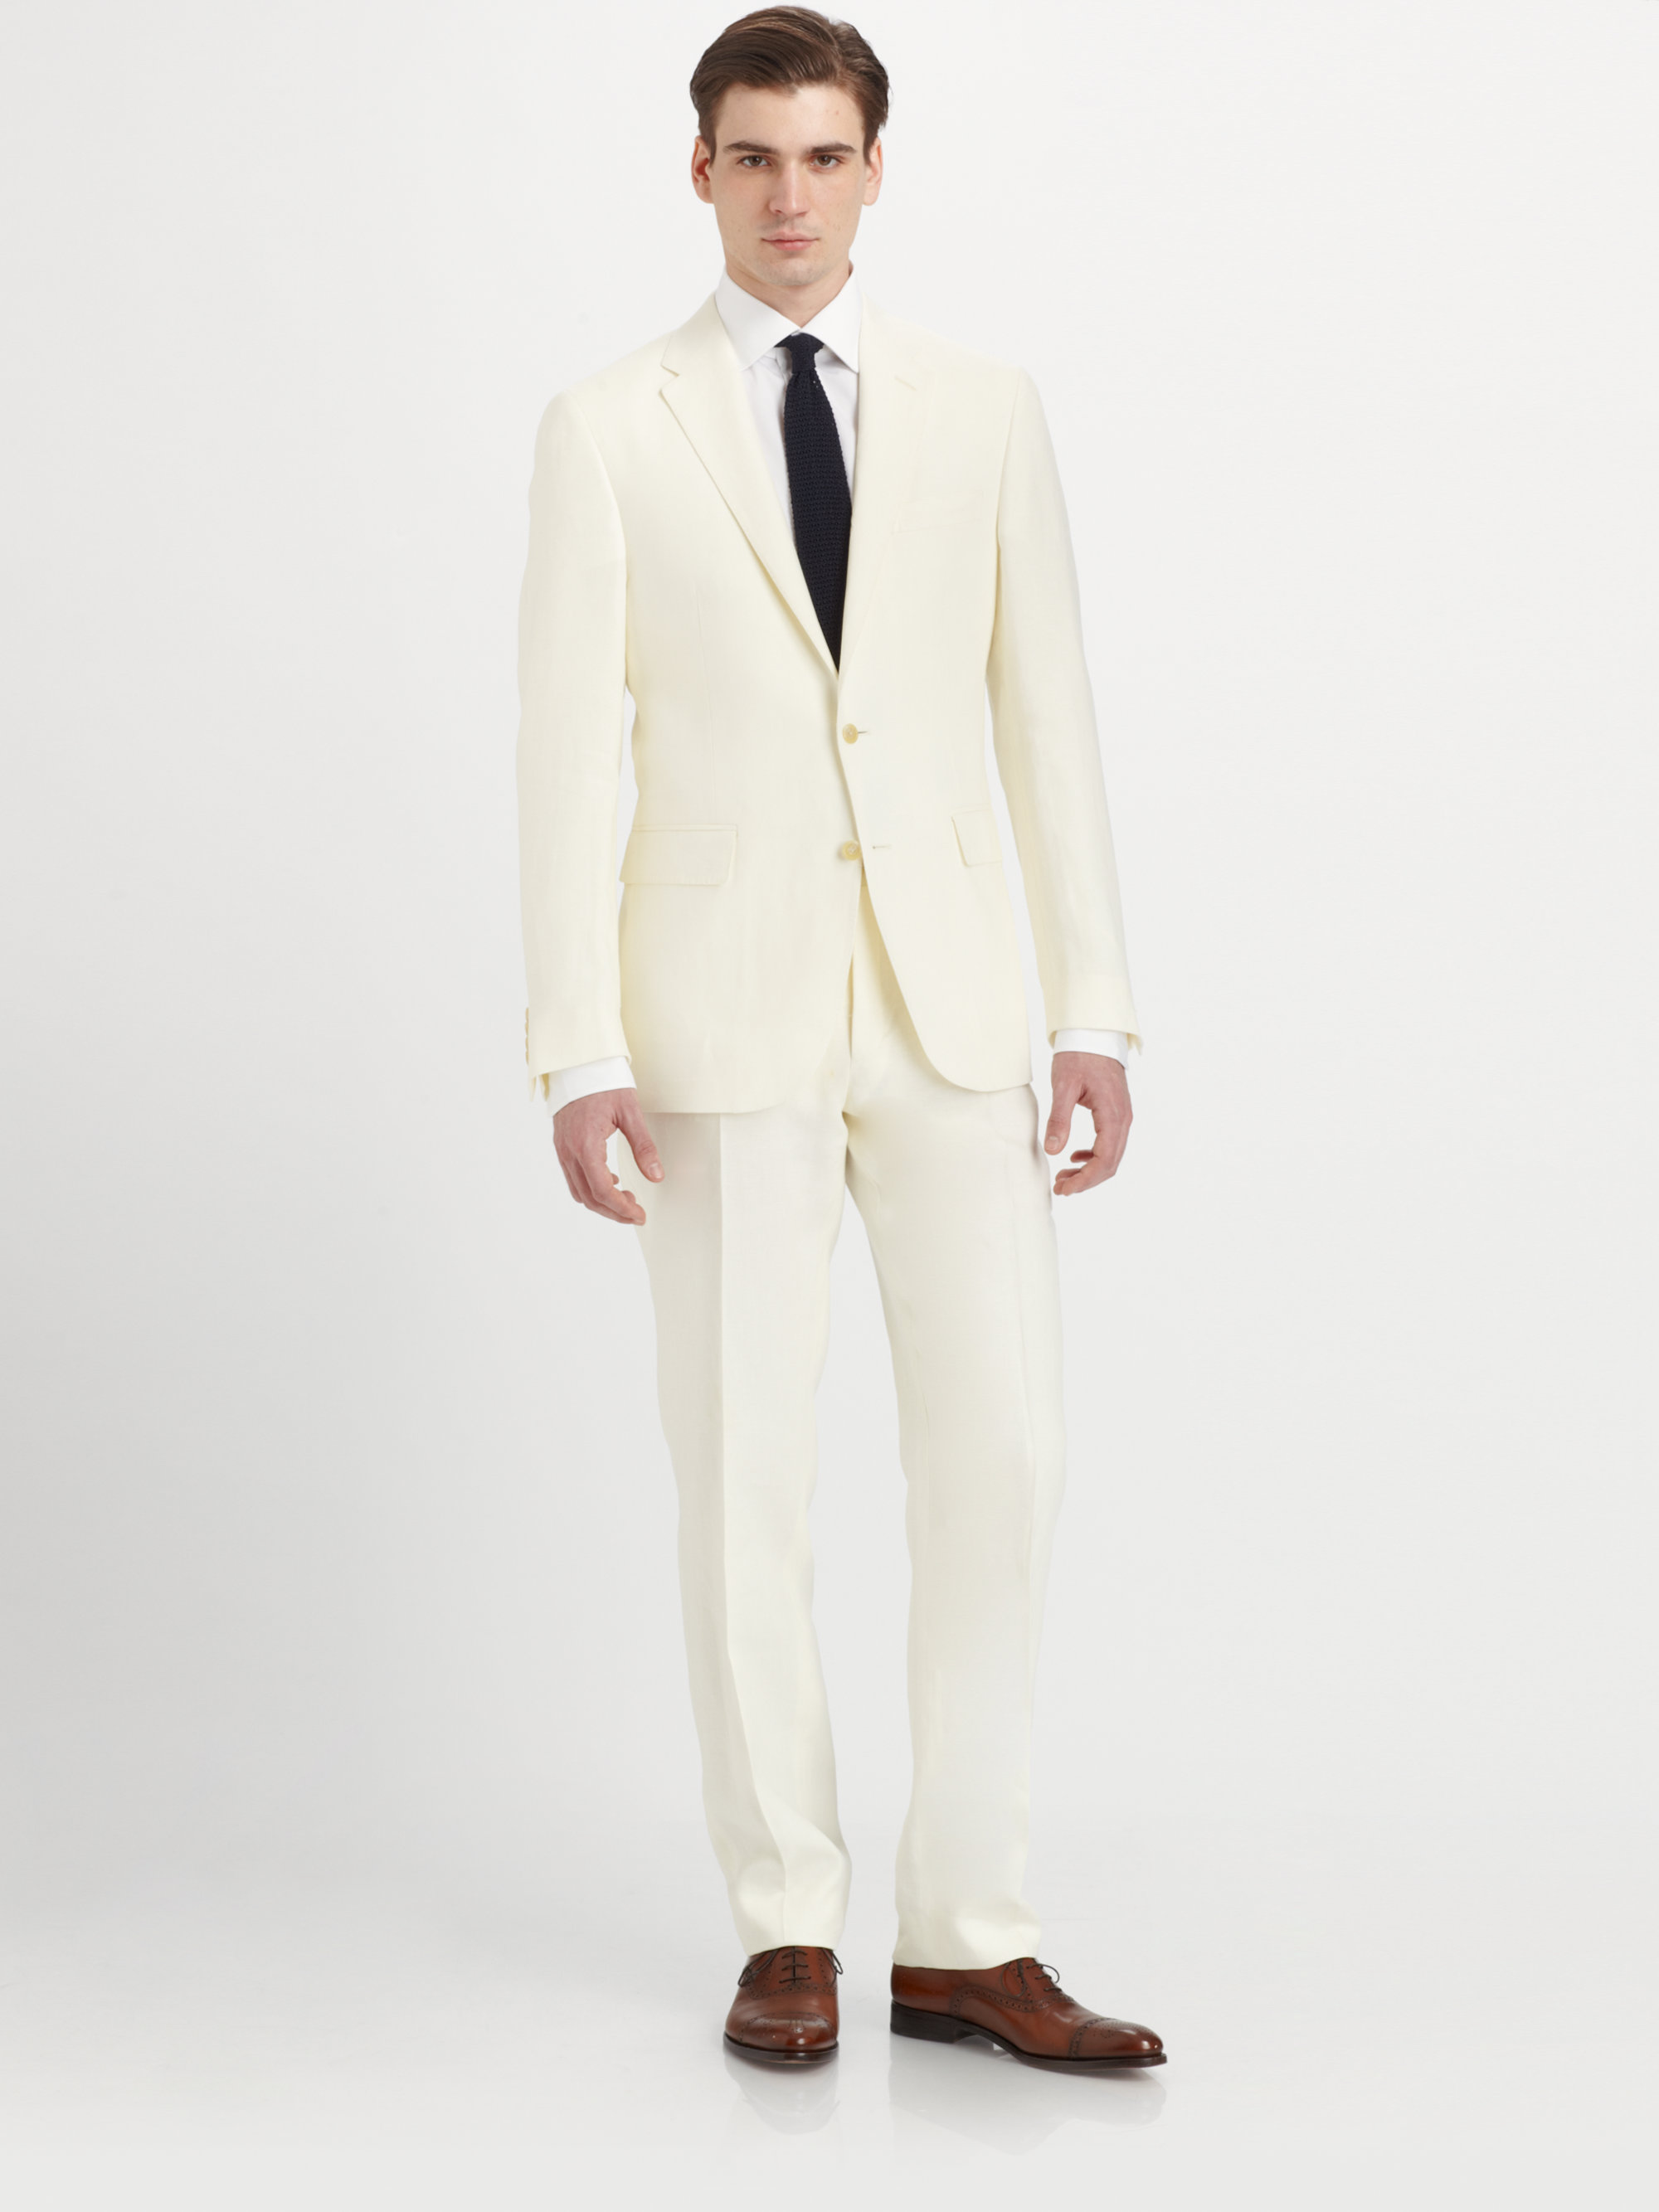 Lyst - Polo Ralph Lauren Customfit Linen Suit in Natural for Men